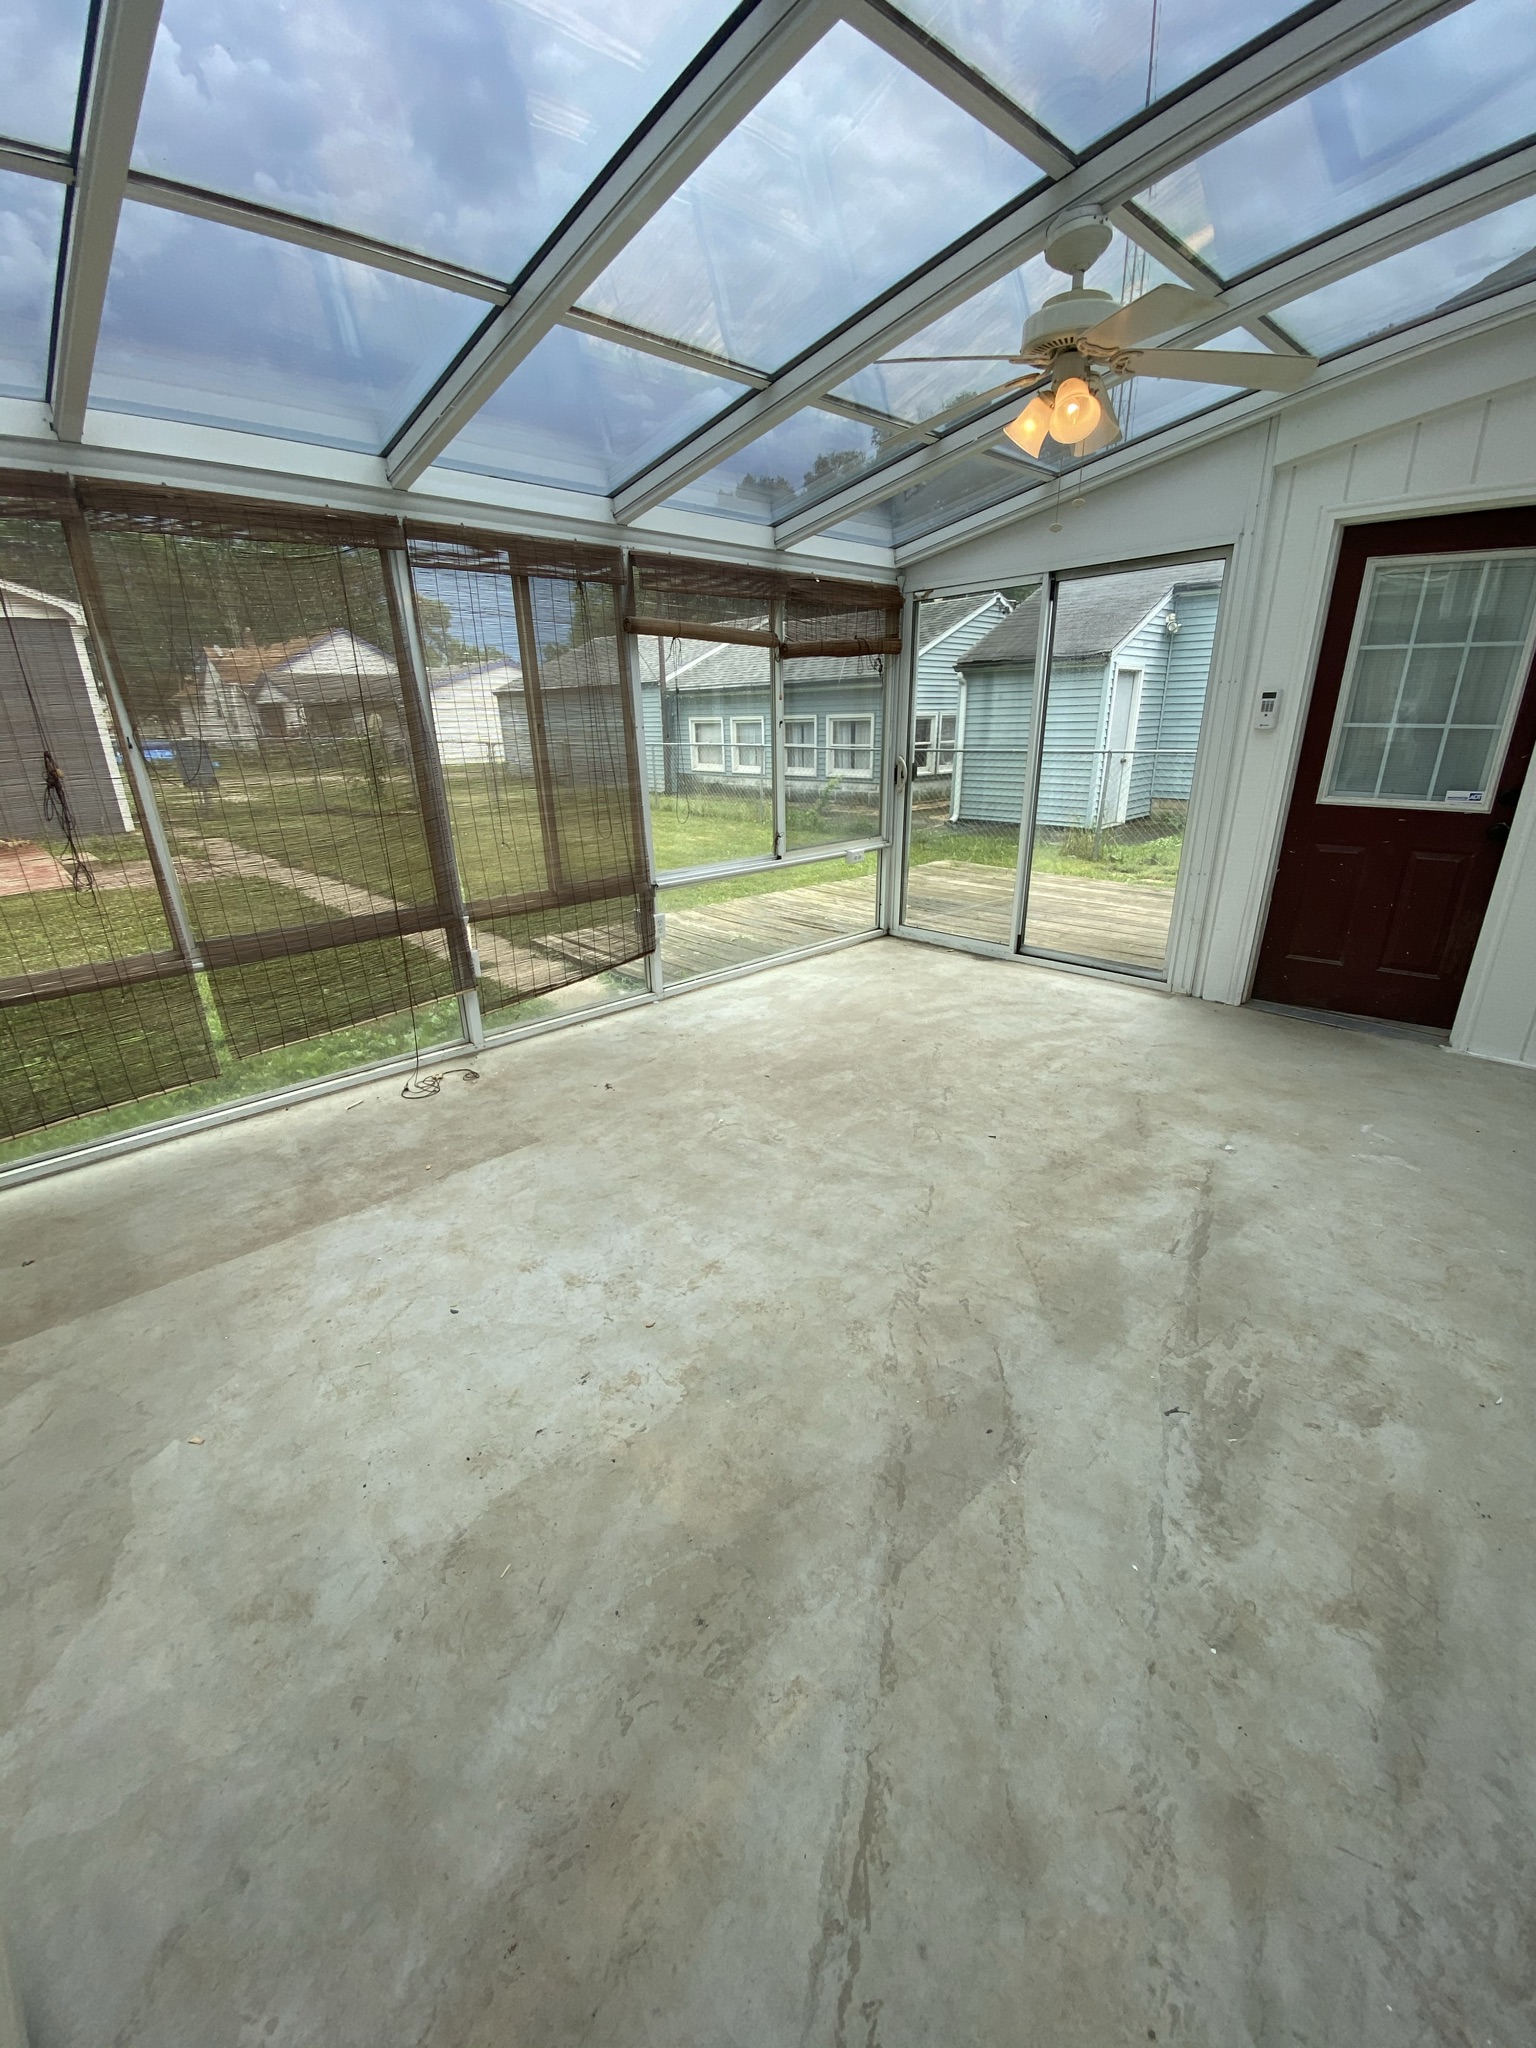 Unfinished sunroom concrete floor